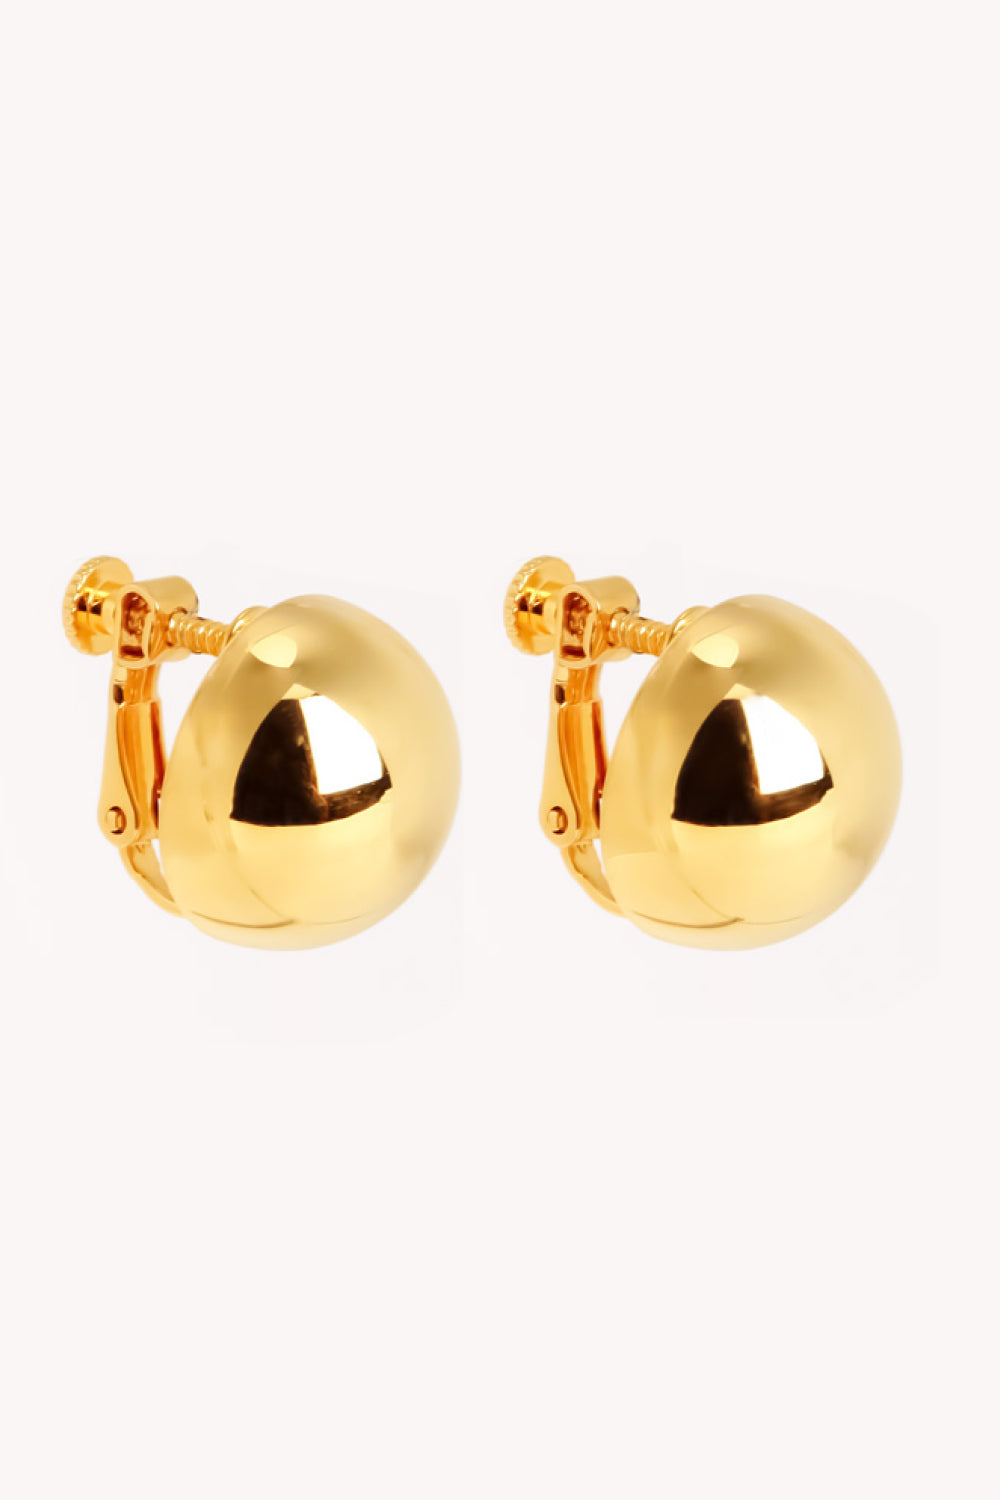 18K Gold Plated Ball Stud Earrings - Earrings - FITGGINS